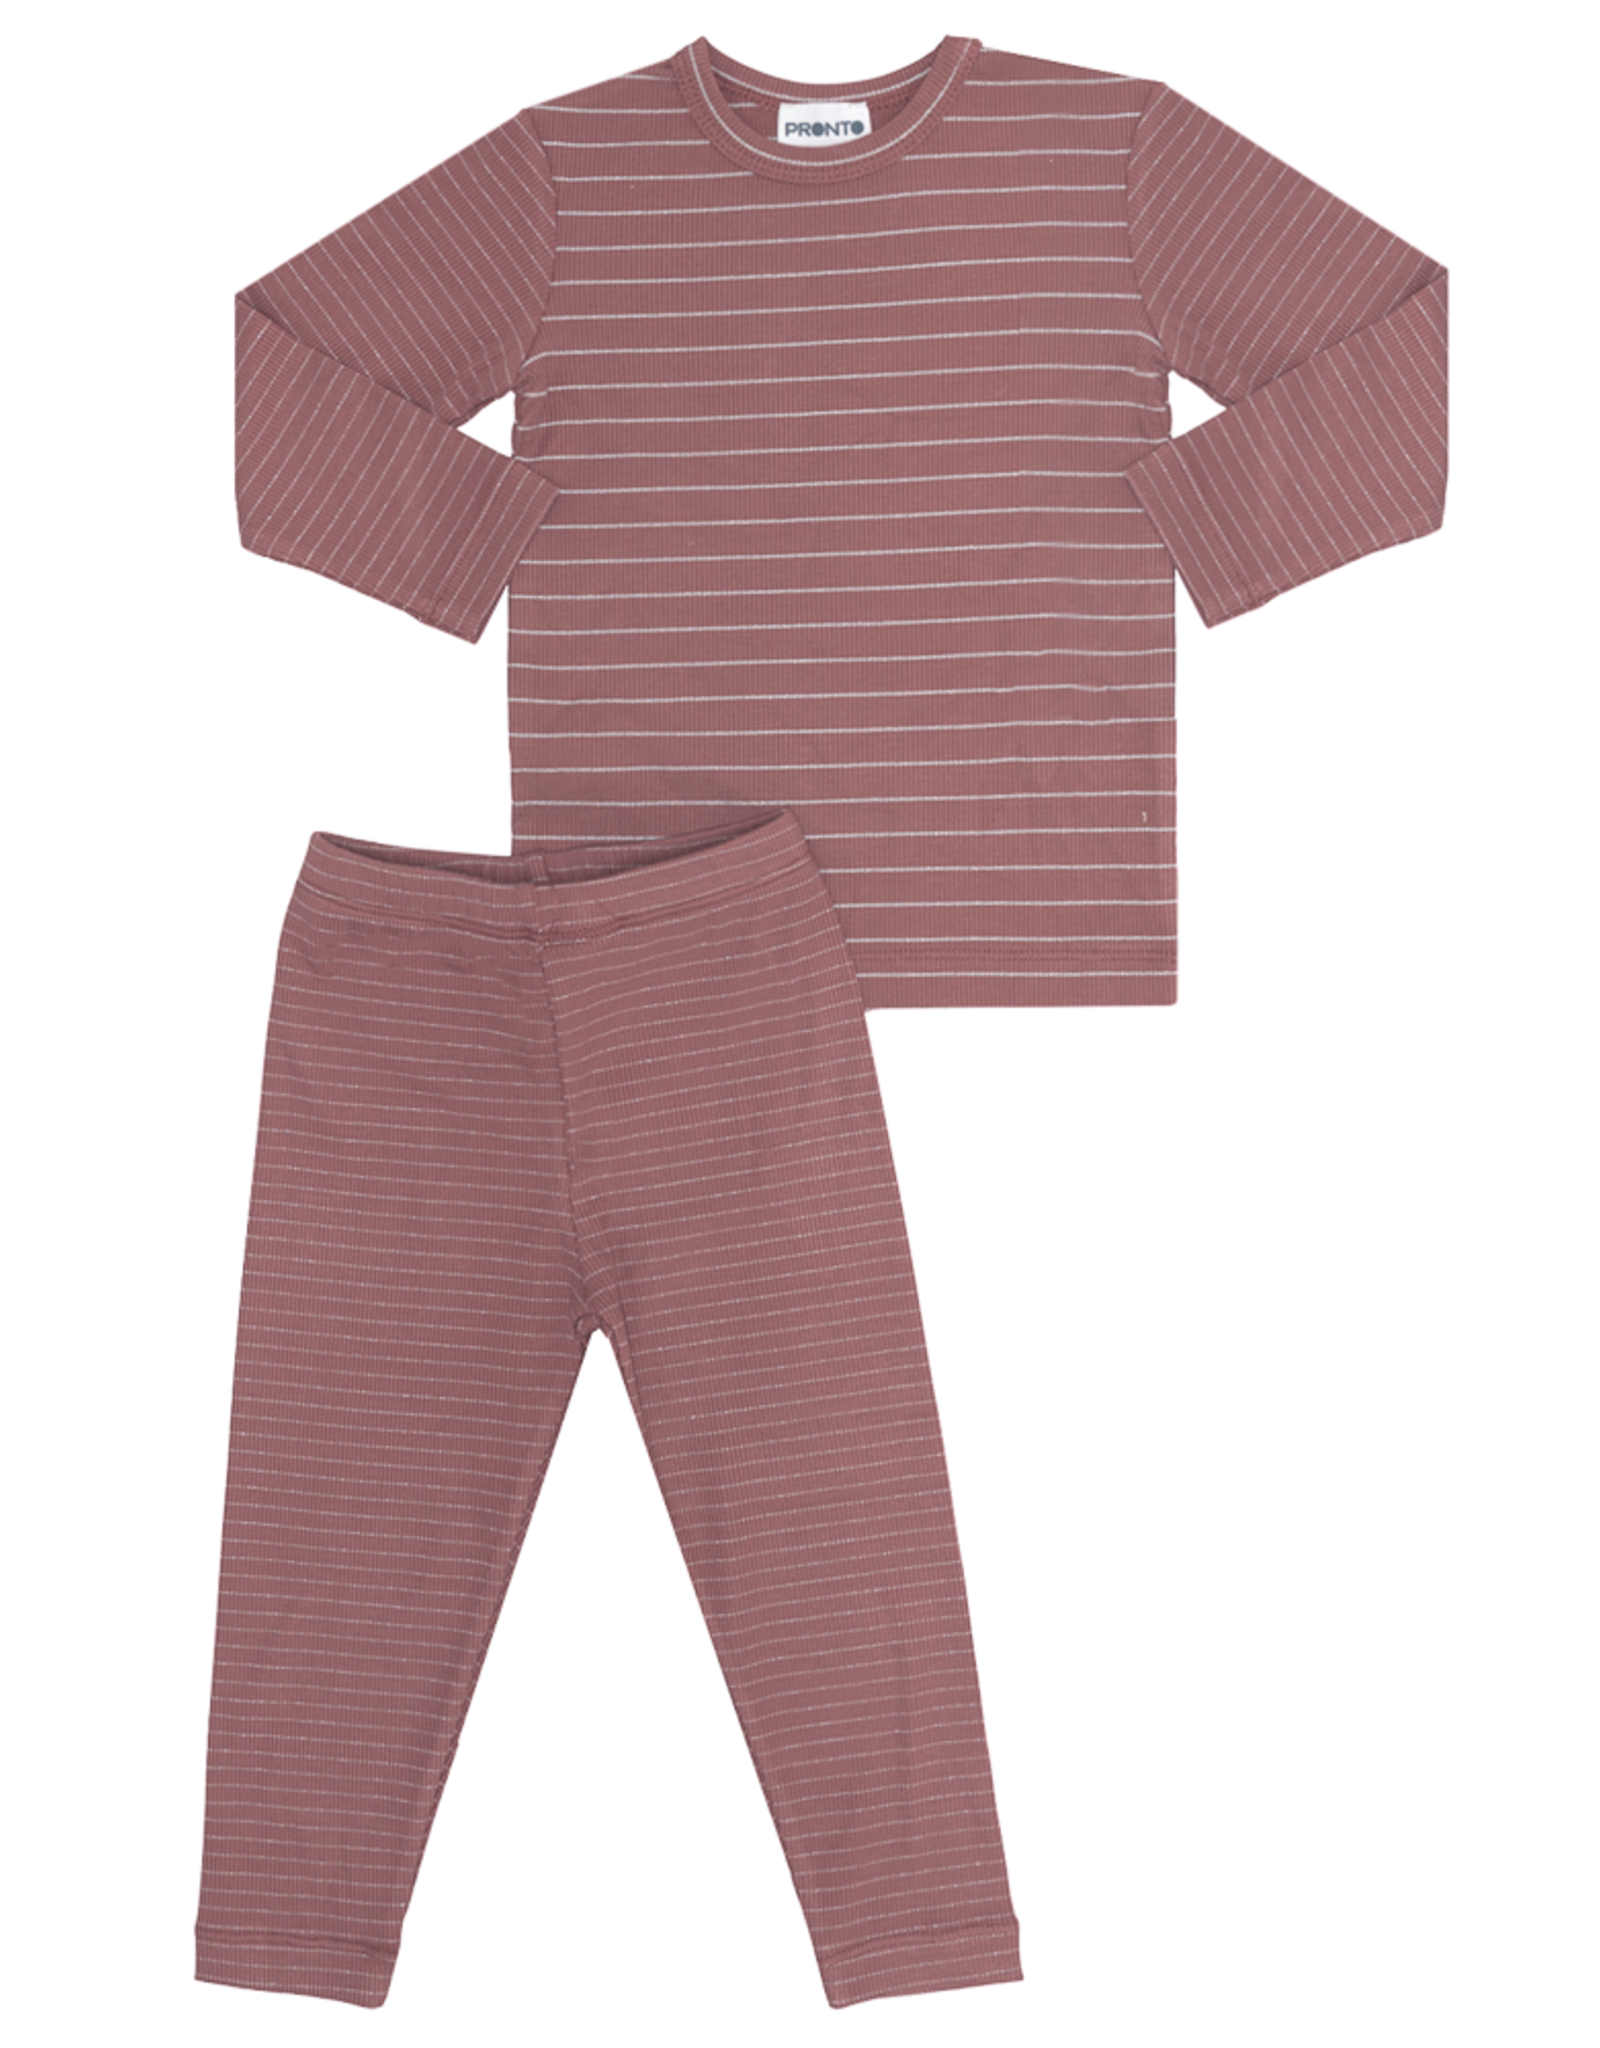 Pronto Pronto Ribbed with Shimmer Stripe Pajama